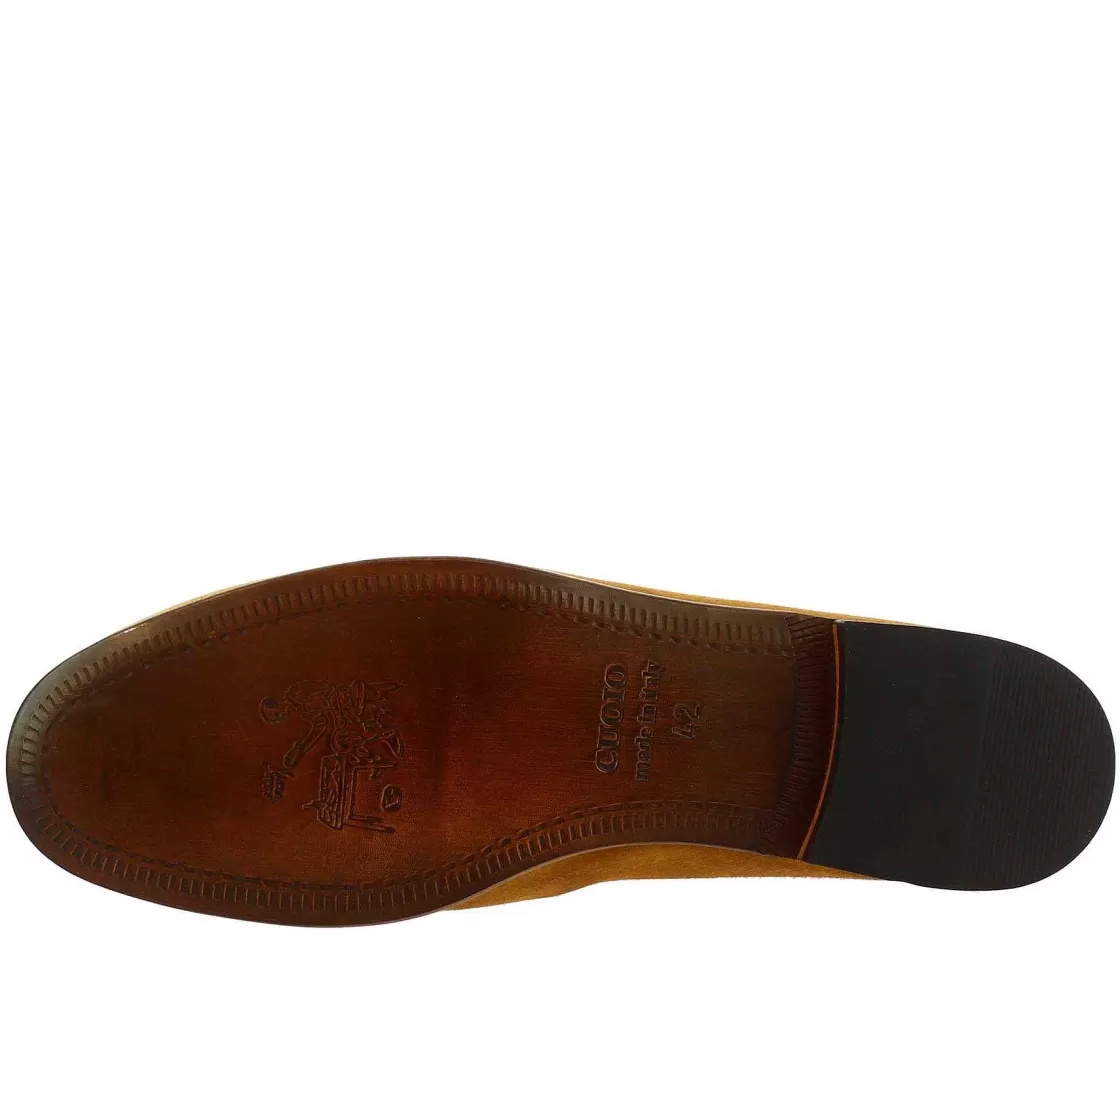 Leonardo Handmade Men'S Slip-On Loafers In Brown Suede Leather New